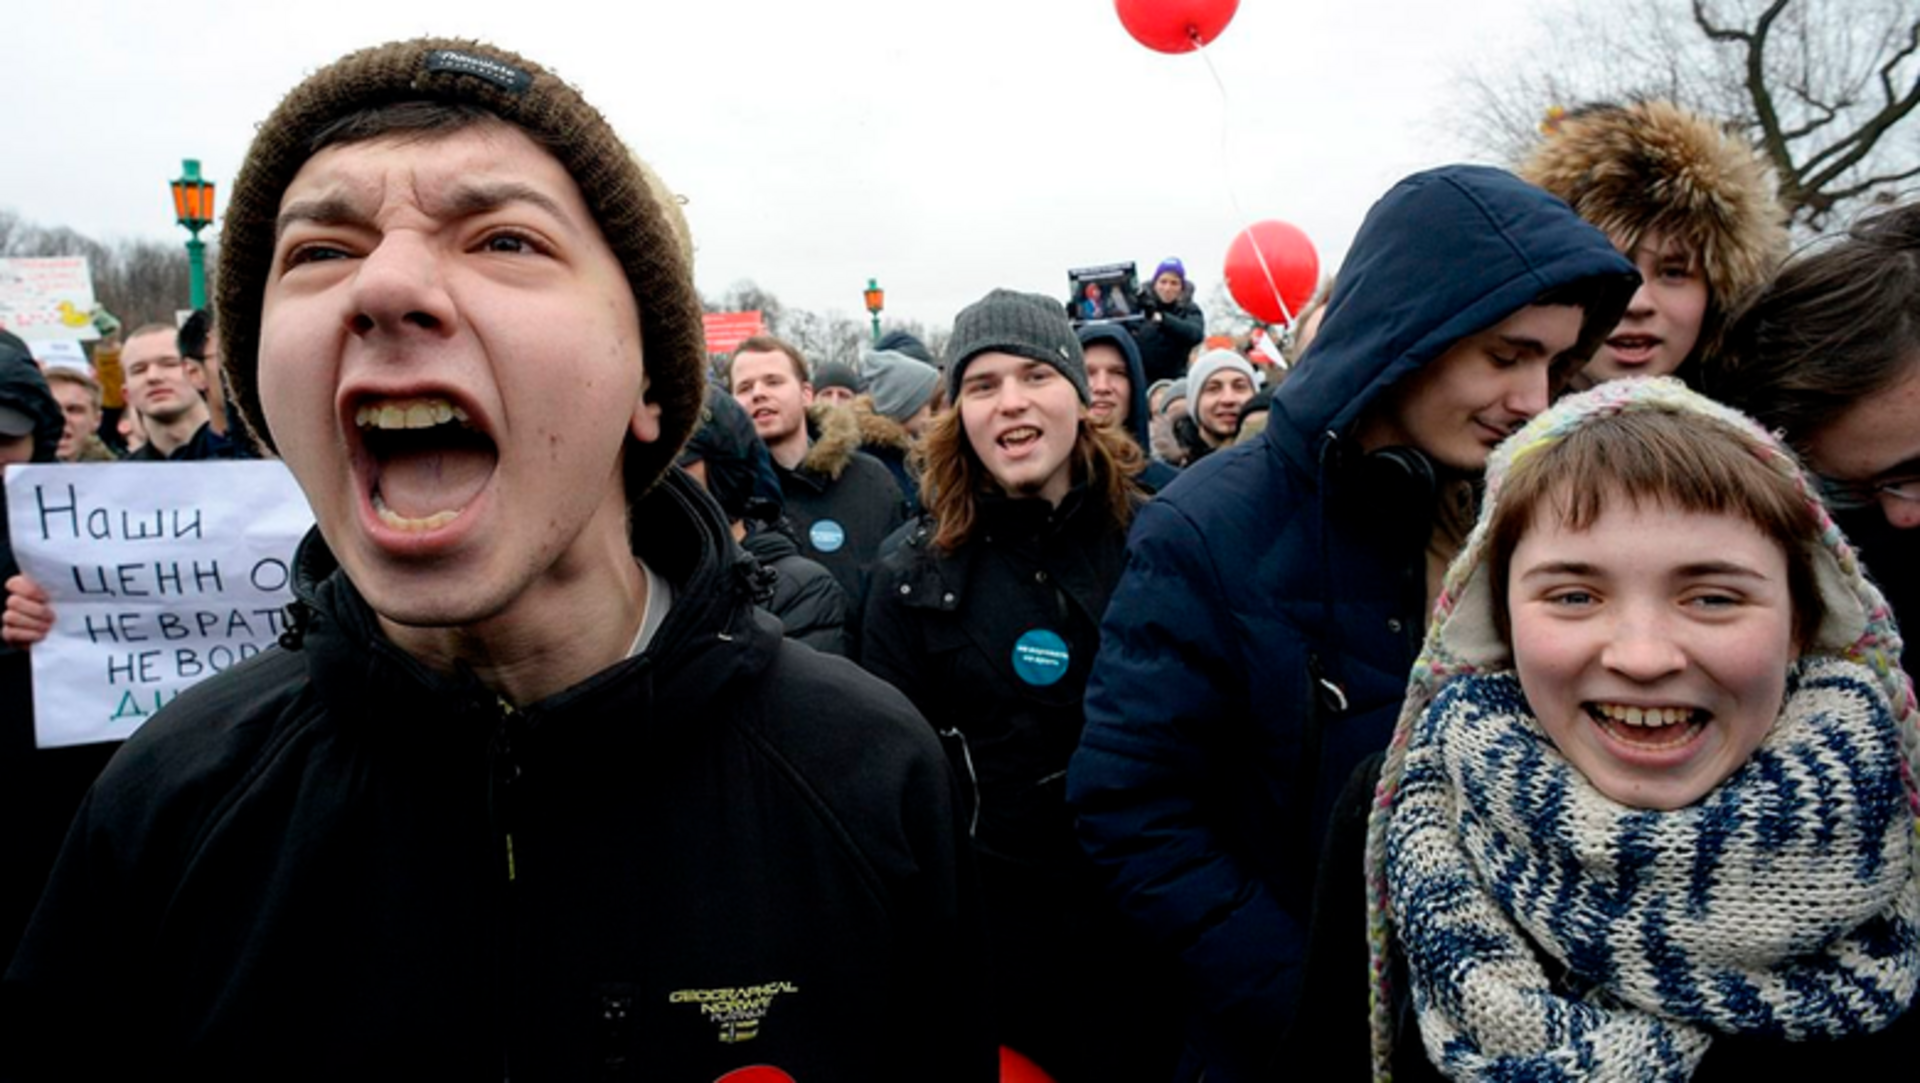 Школьники на митинге Навального. Молодежь на митинге. Дети на митинге Навального. Подростки на митинге Навального. Митинг подростков